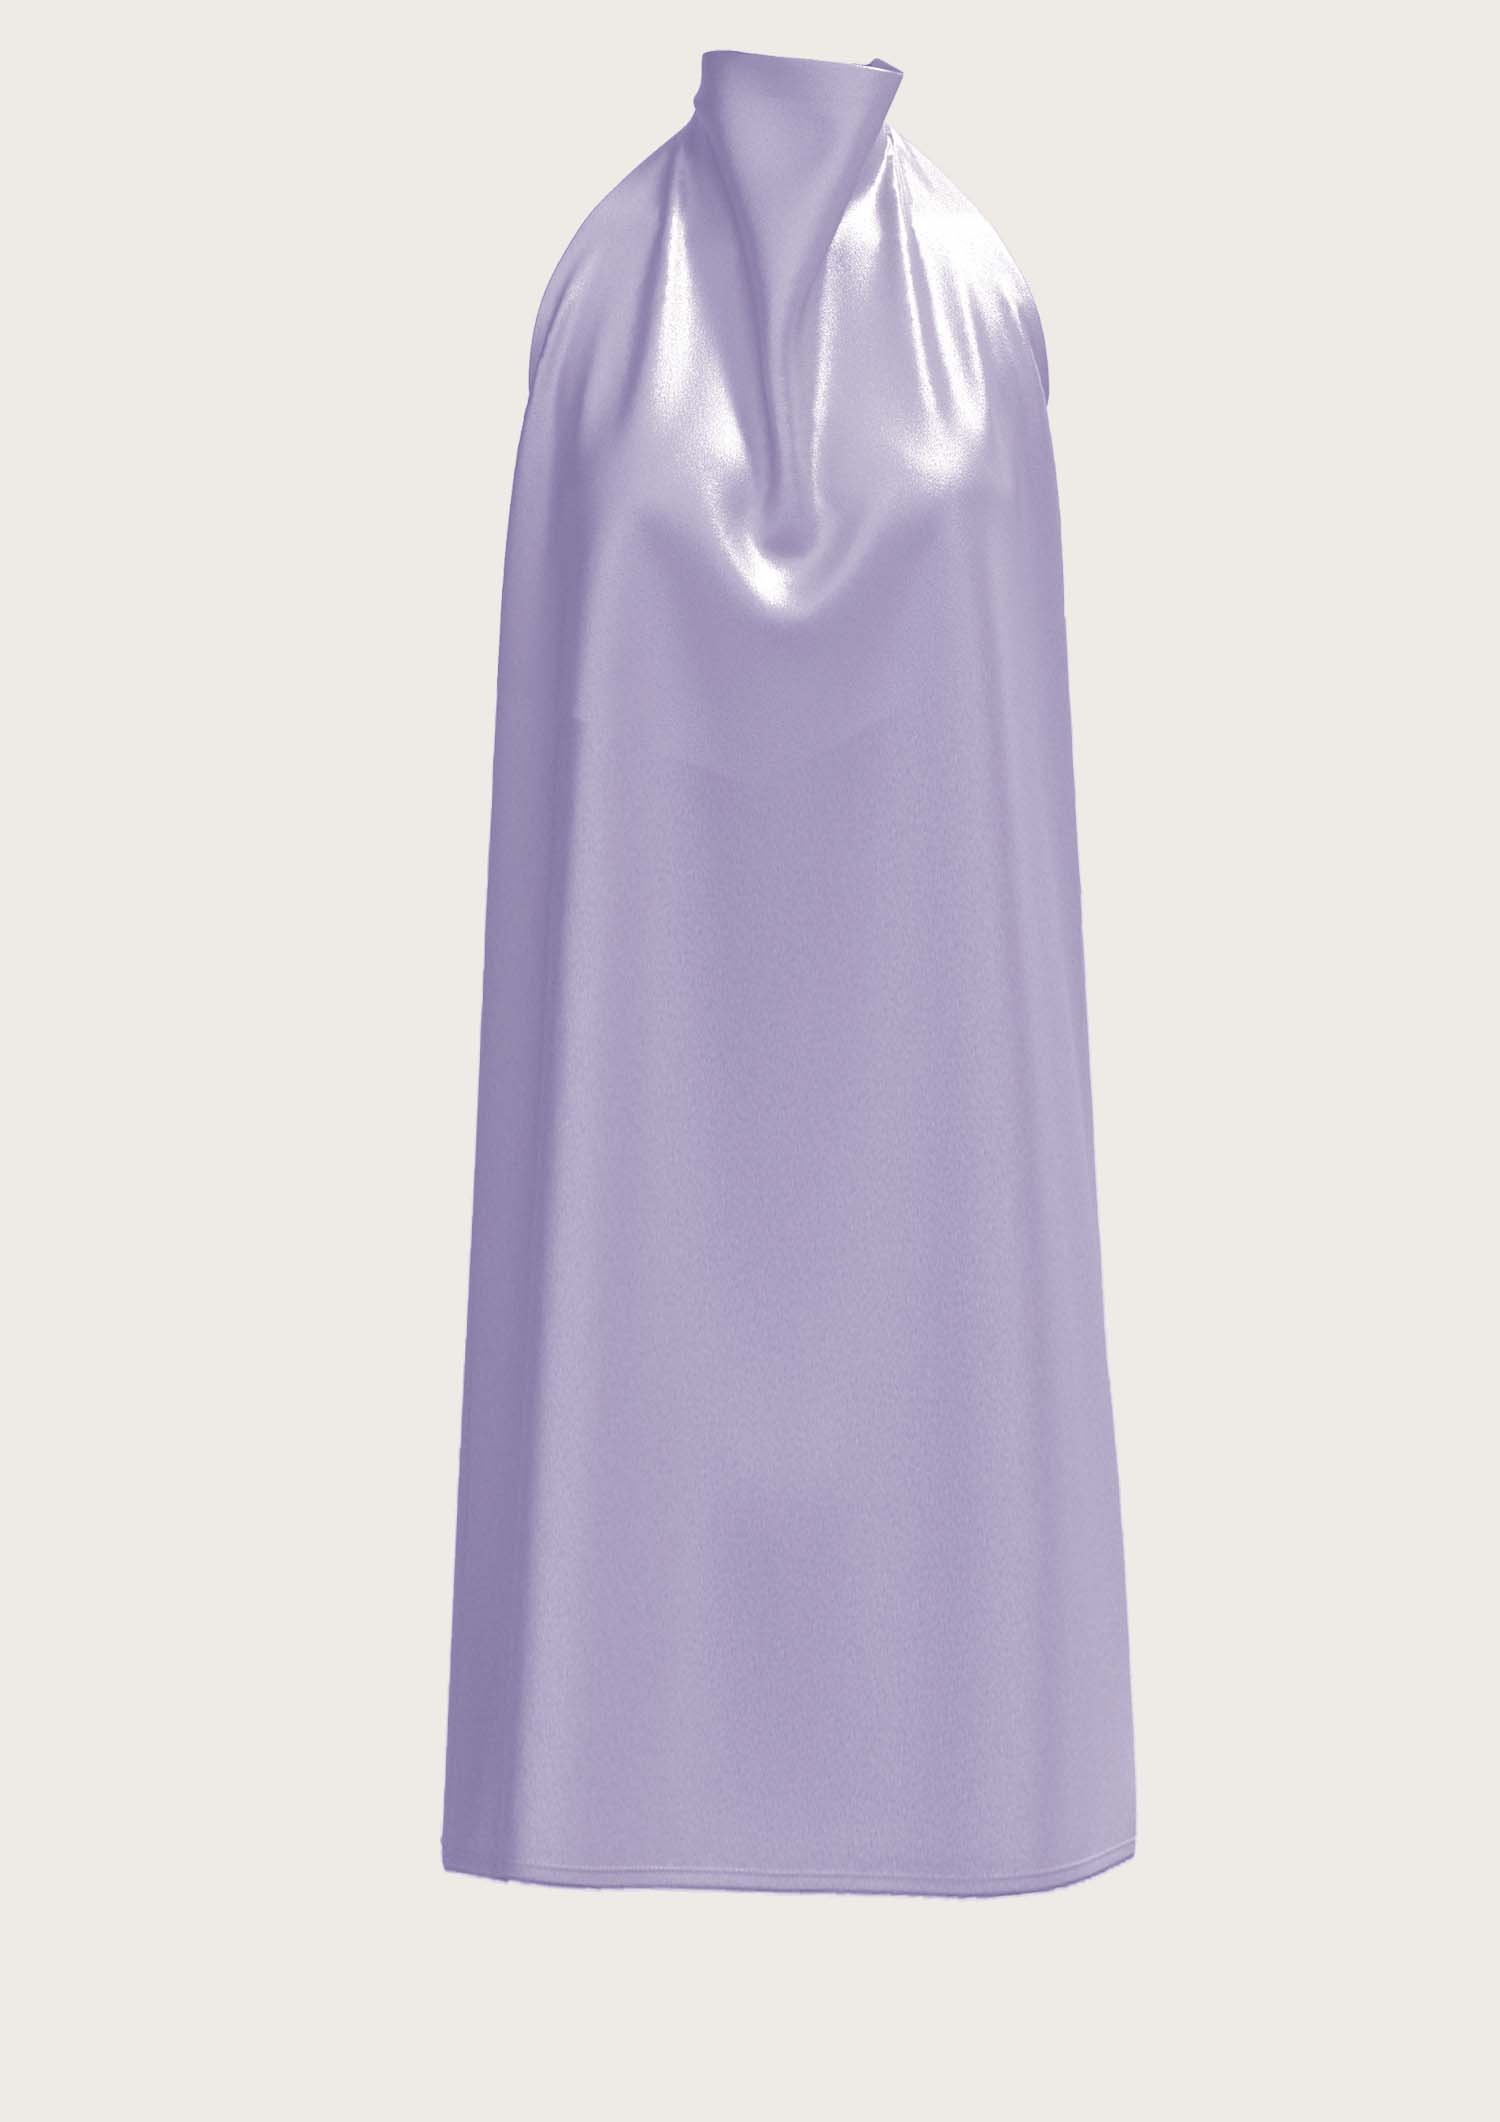 Silk Neckholder Dress Sophie in Lavender (Kopie)